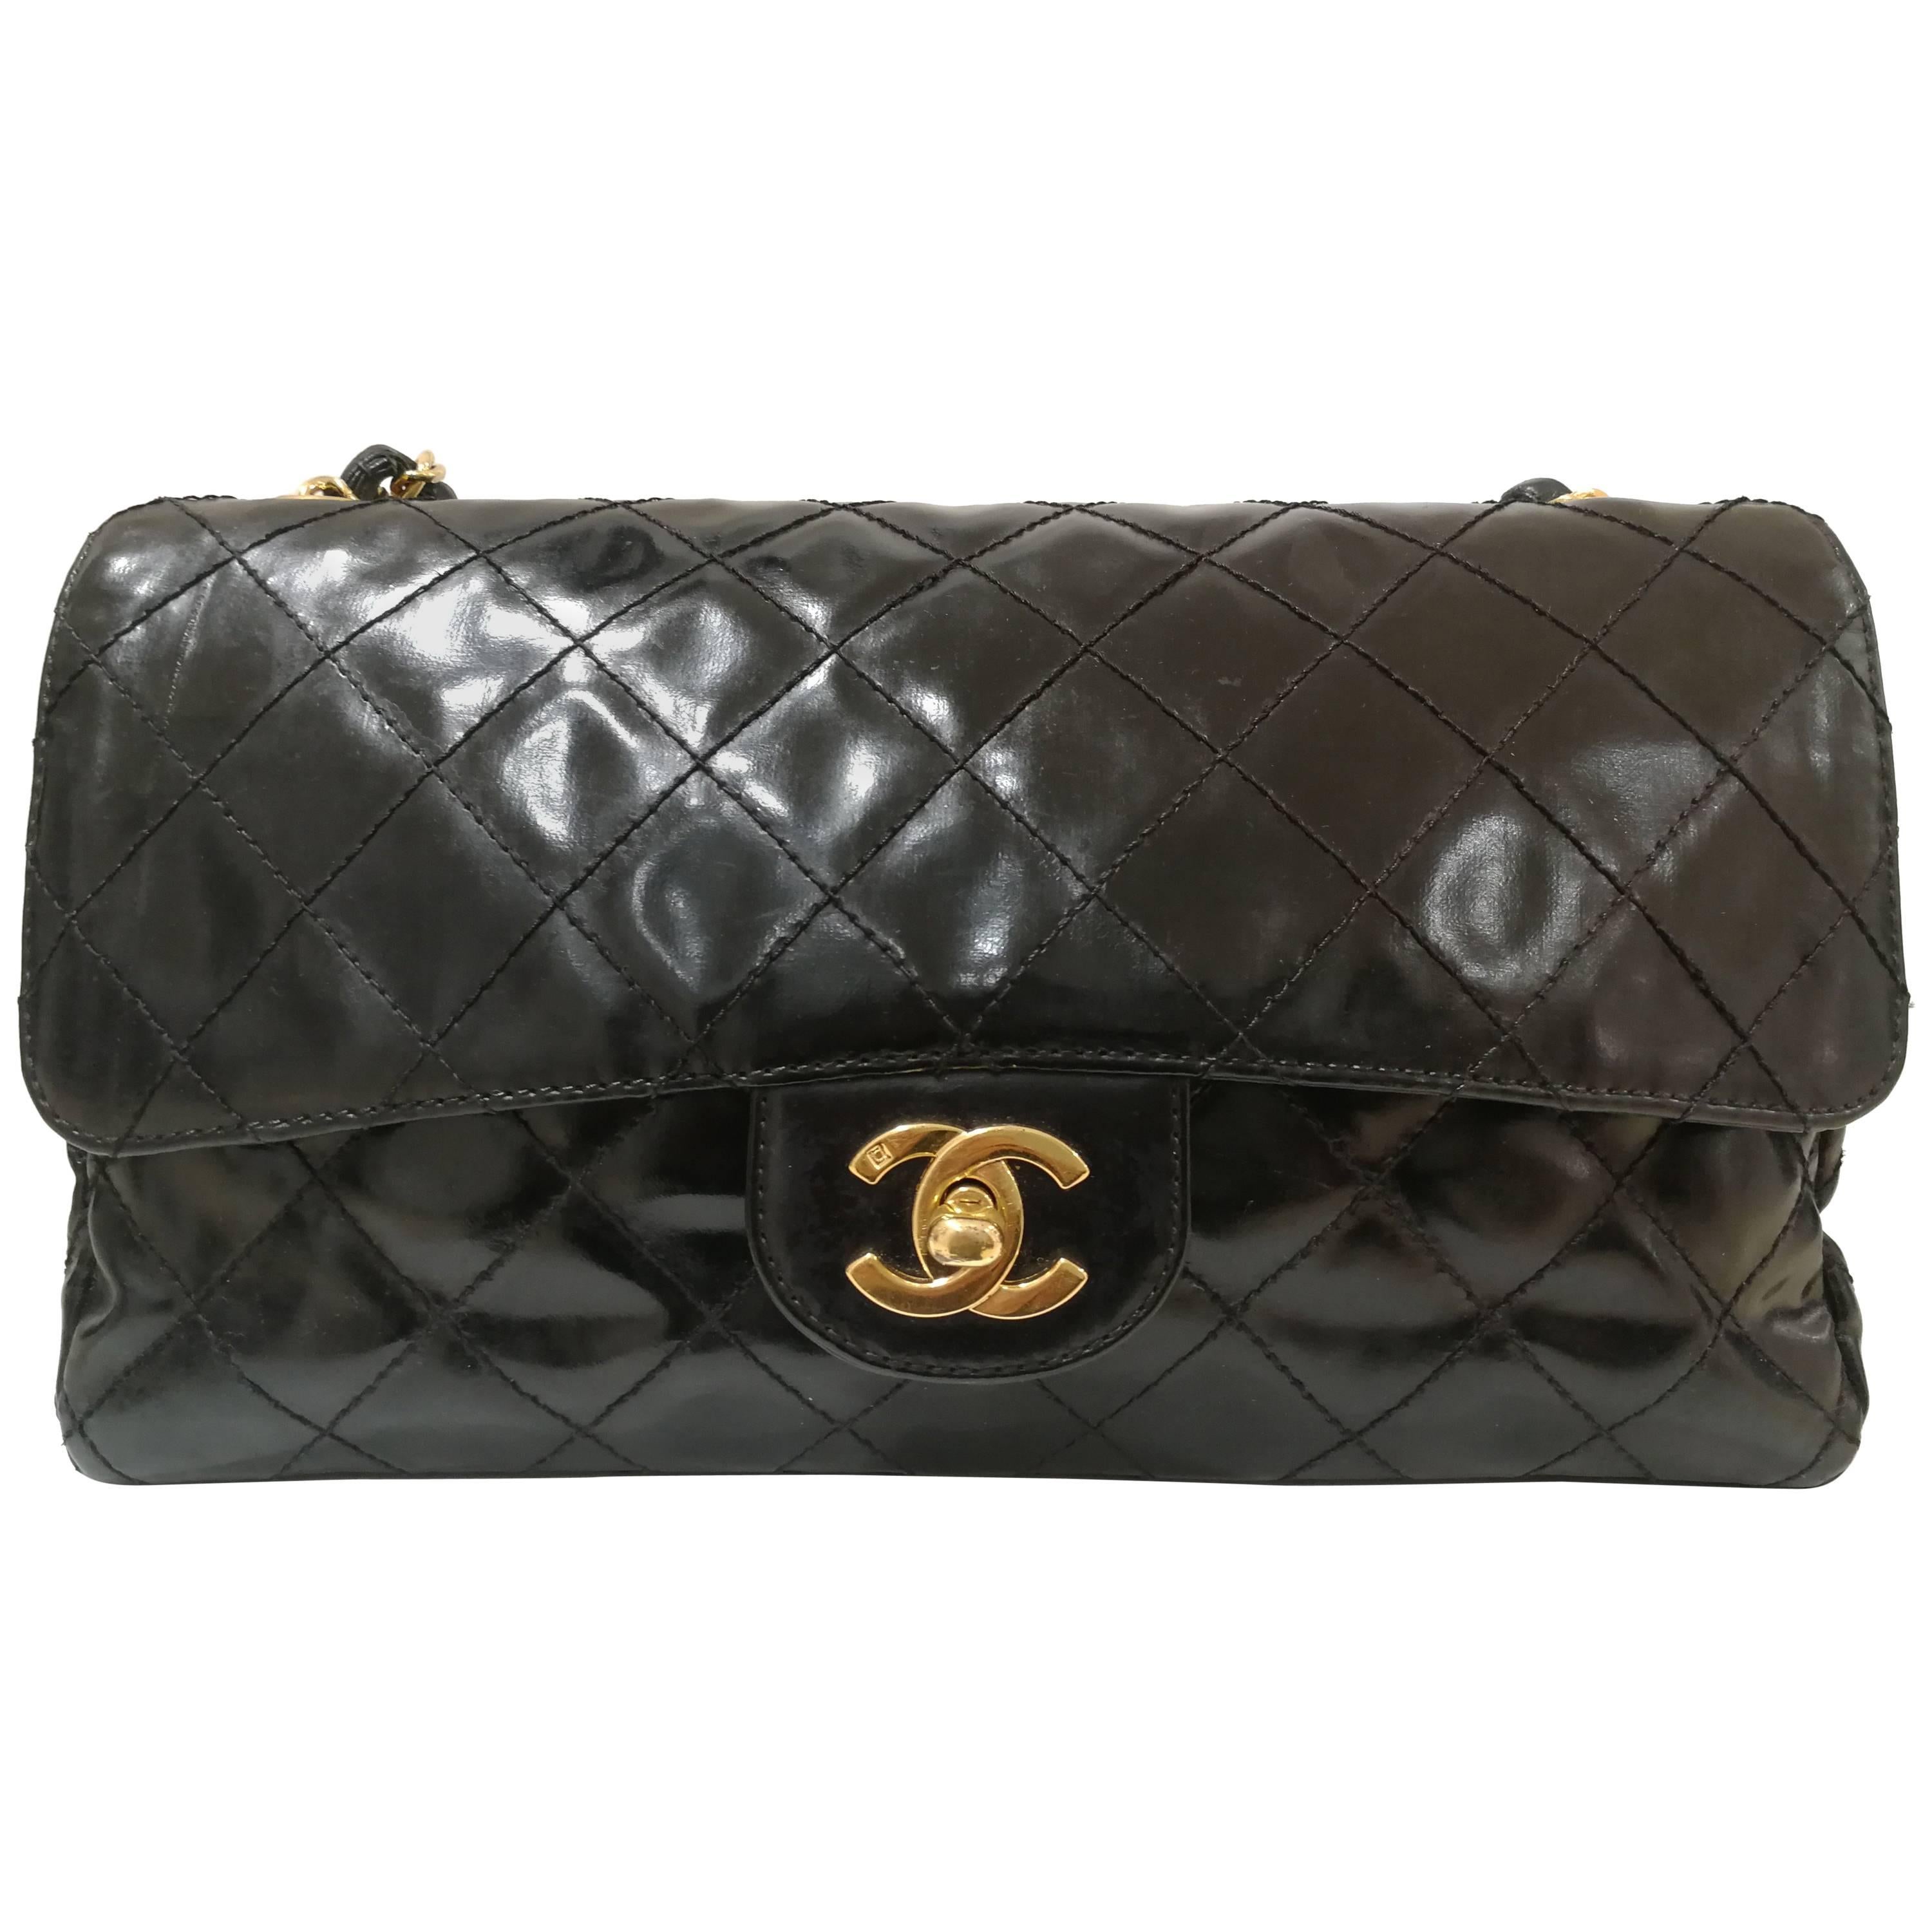 1997 Limited Edition Chanel Black 2.55 Gold tone Hardware Bag